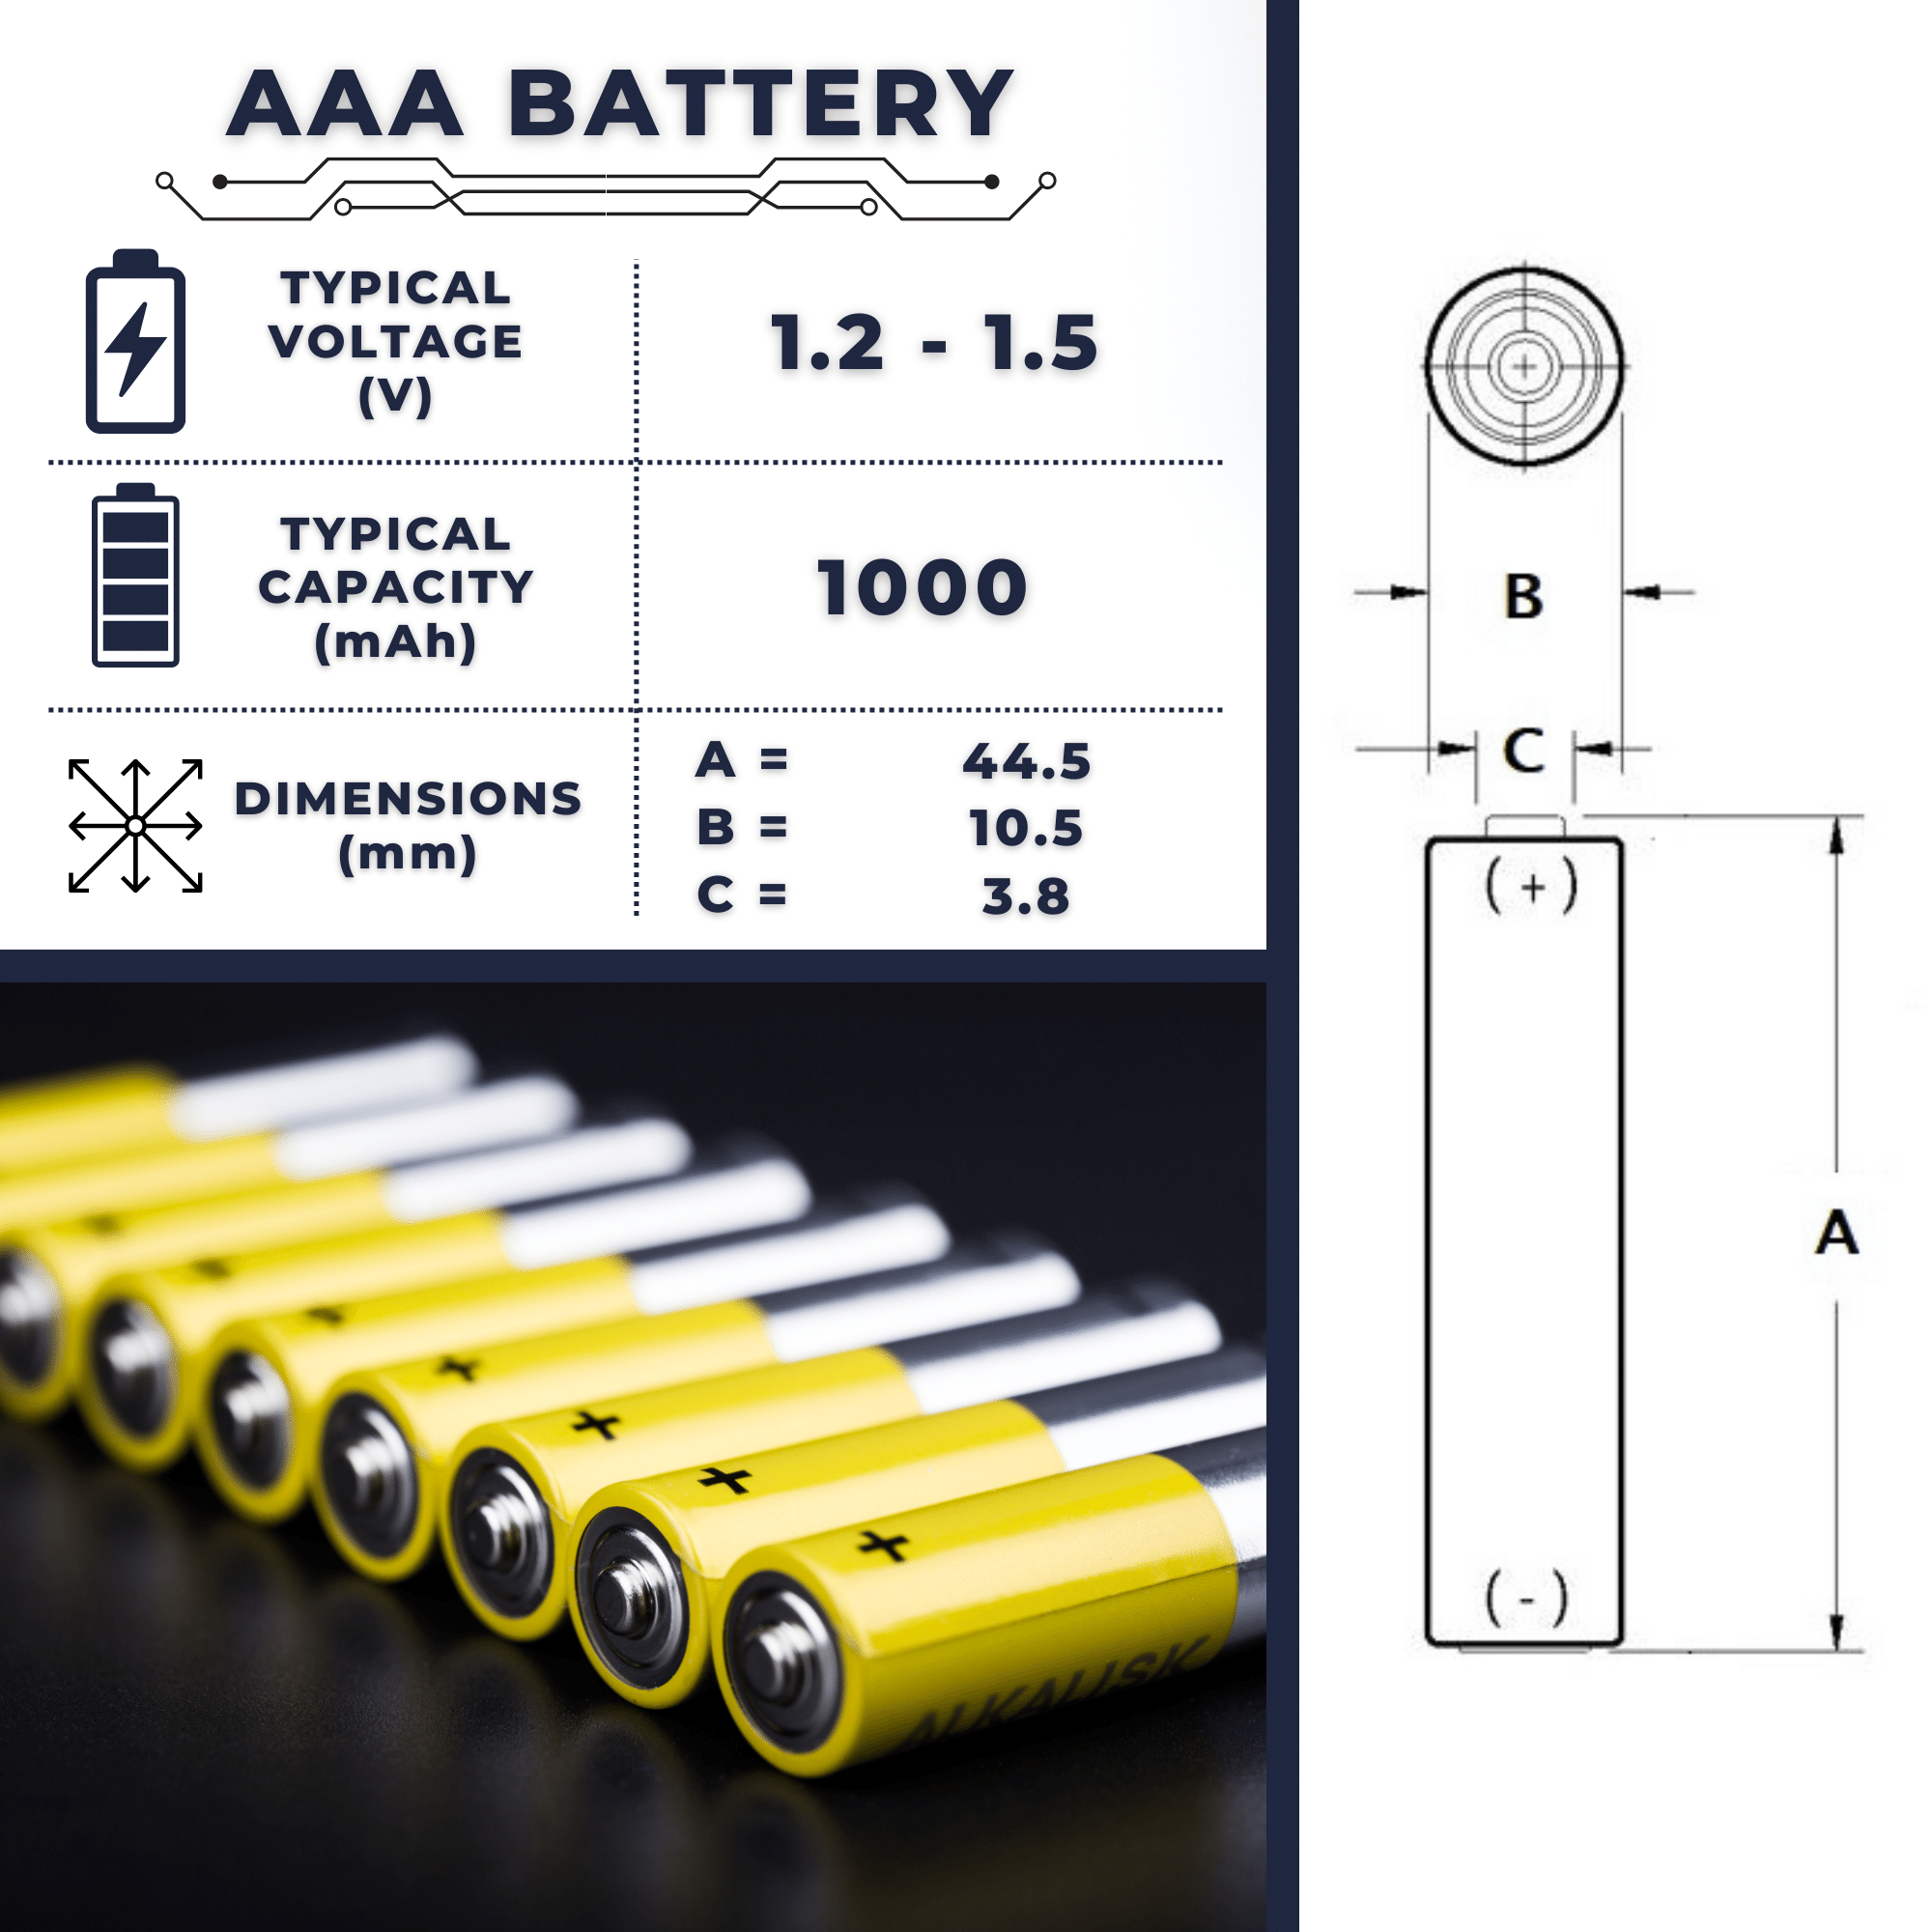 Characteristics of AAA Batteries